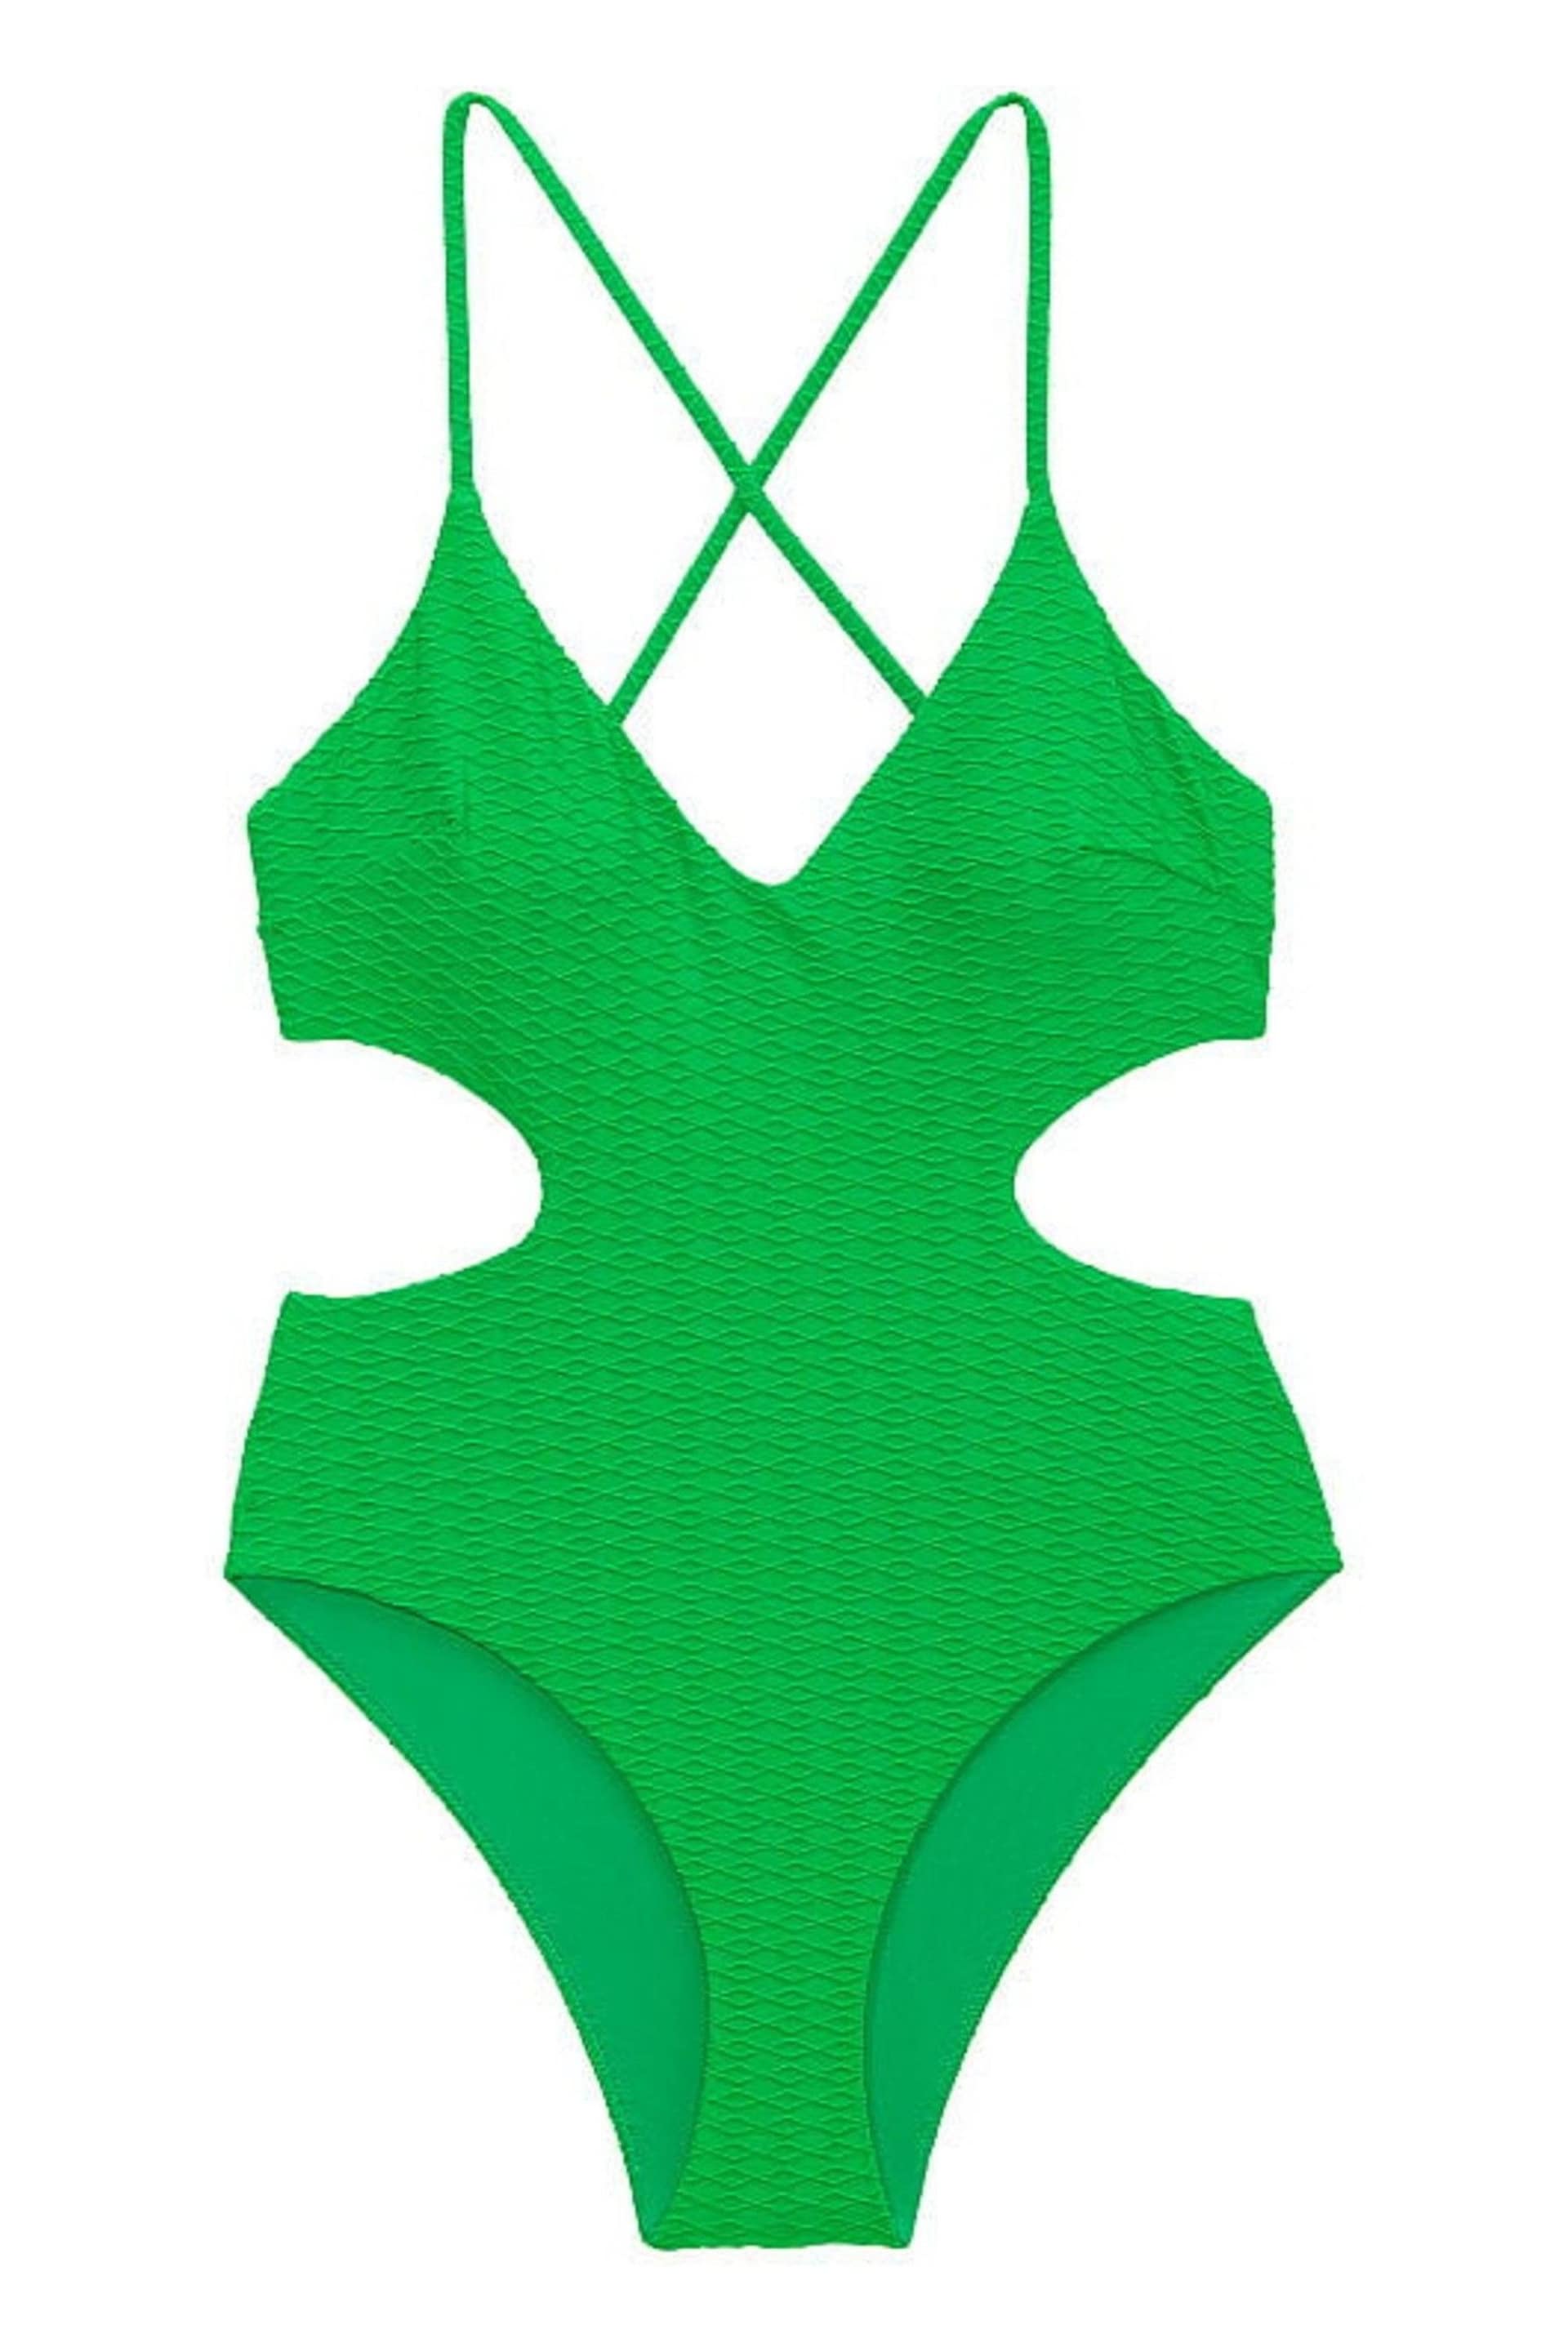 Victoria's Secret Green Fishnet Swimsuit - Image 3 of 4